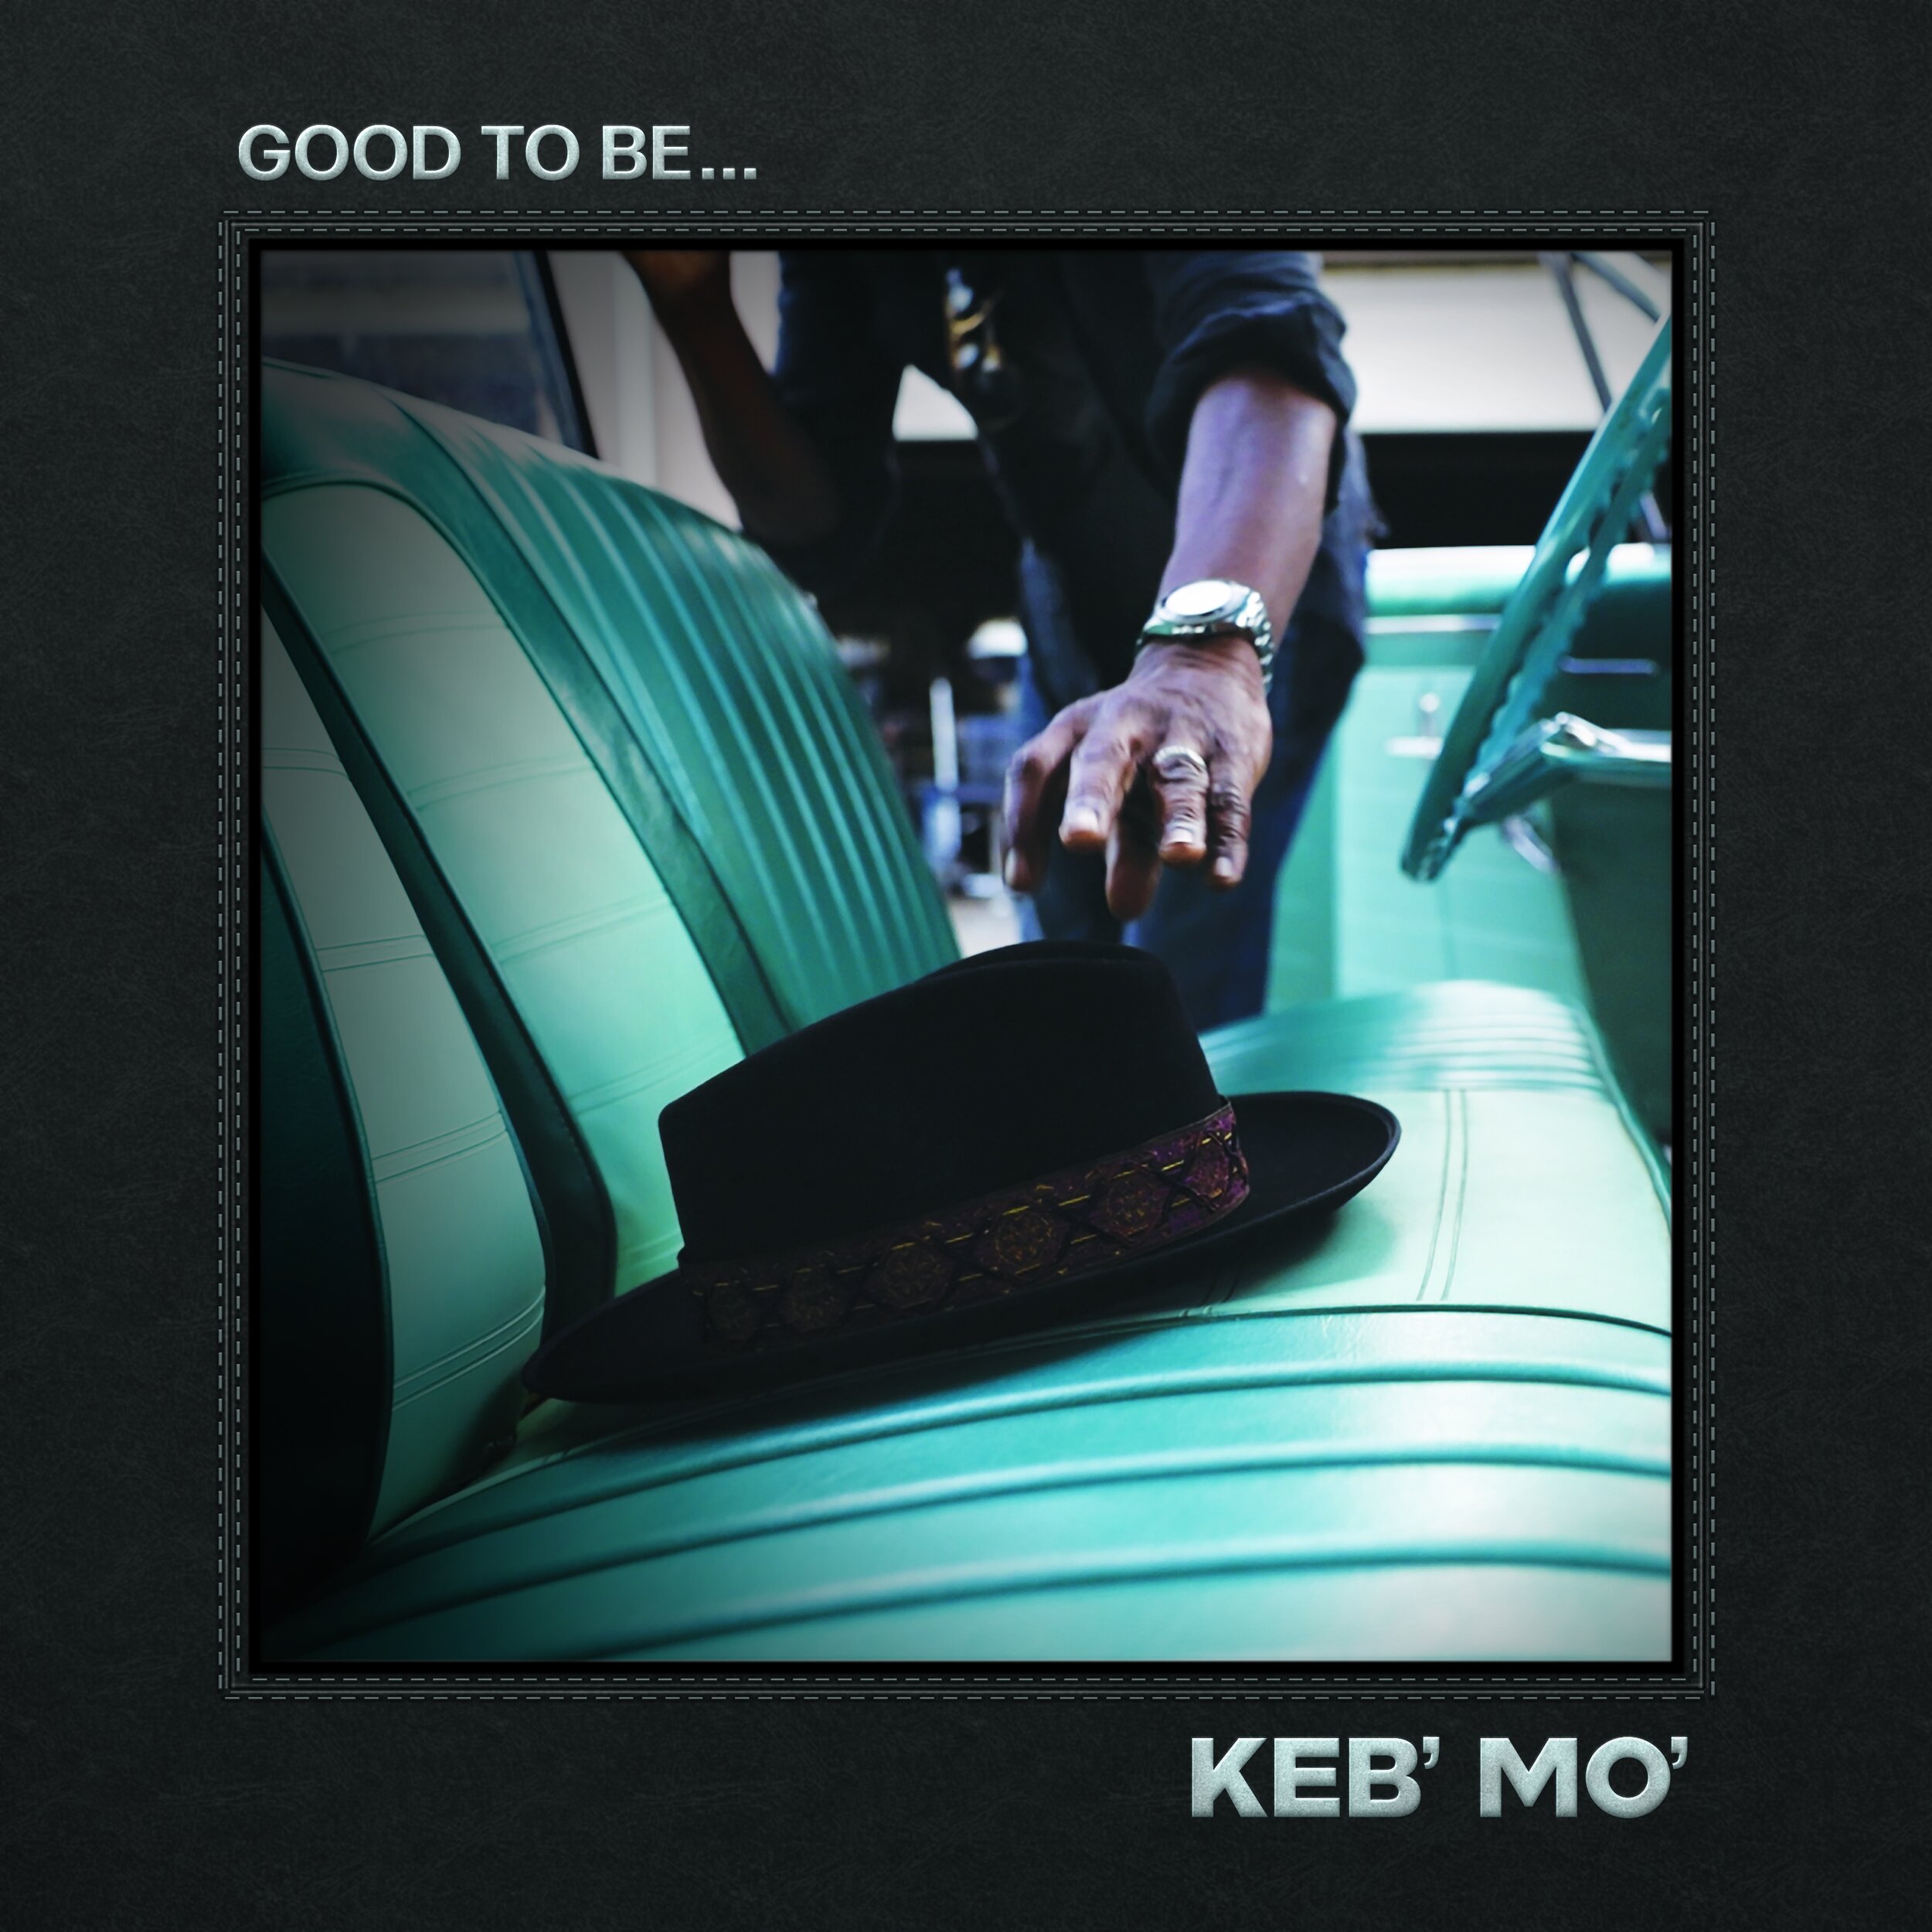 Keb Mo 'Good To Be' Album Art.jpg